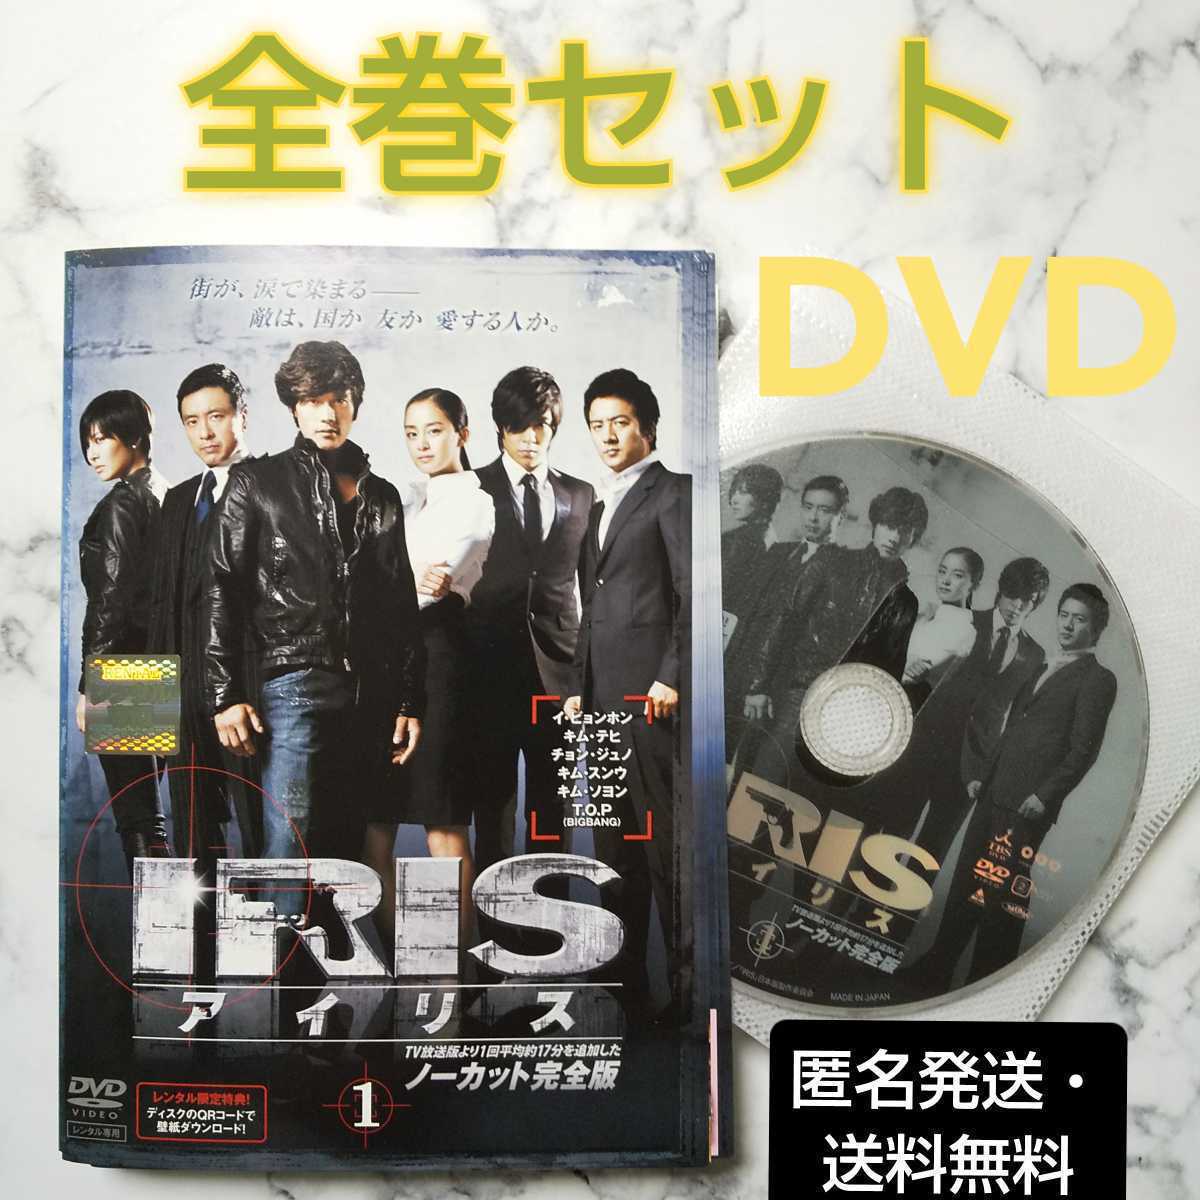 IRIS〔アイリス〕 ノーカット完全版 DVD BOXⅠ Ⅱ セット TVドラマ 売り通販店